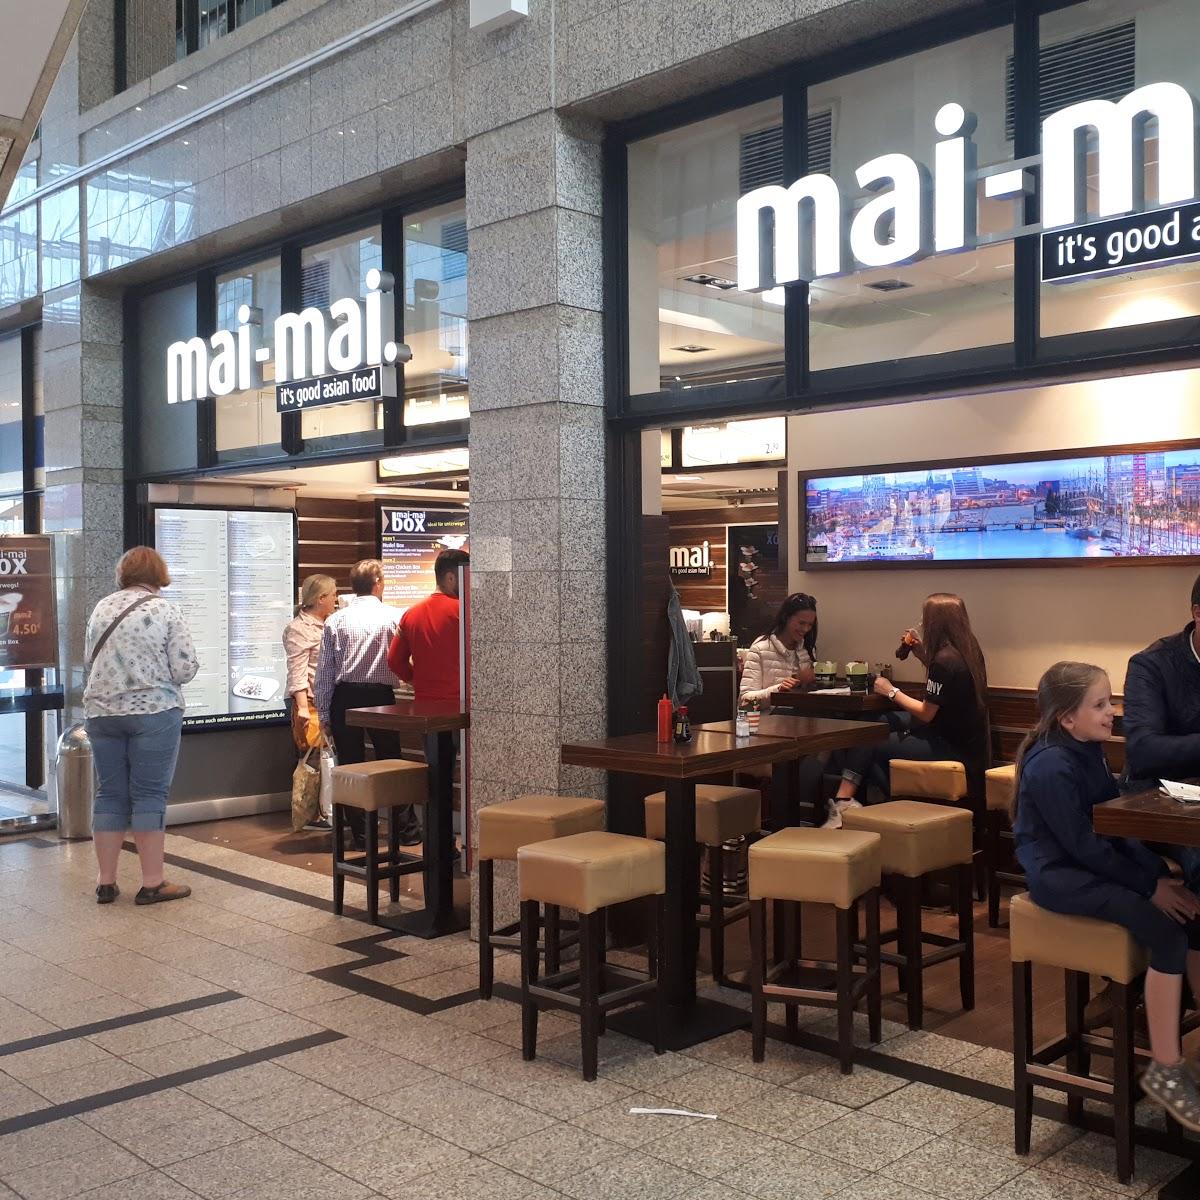 Restaurant "Mai Mai Restaurant" in Kiel